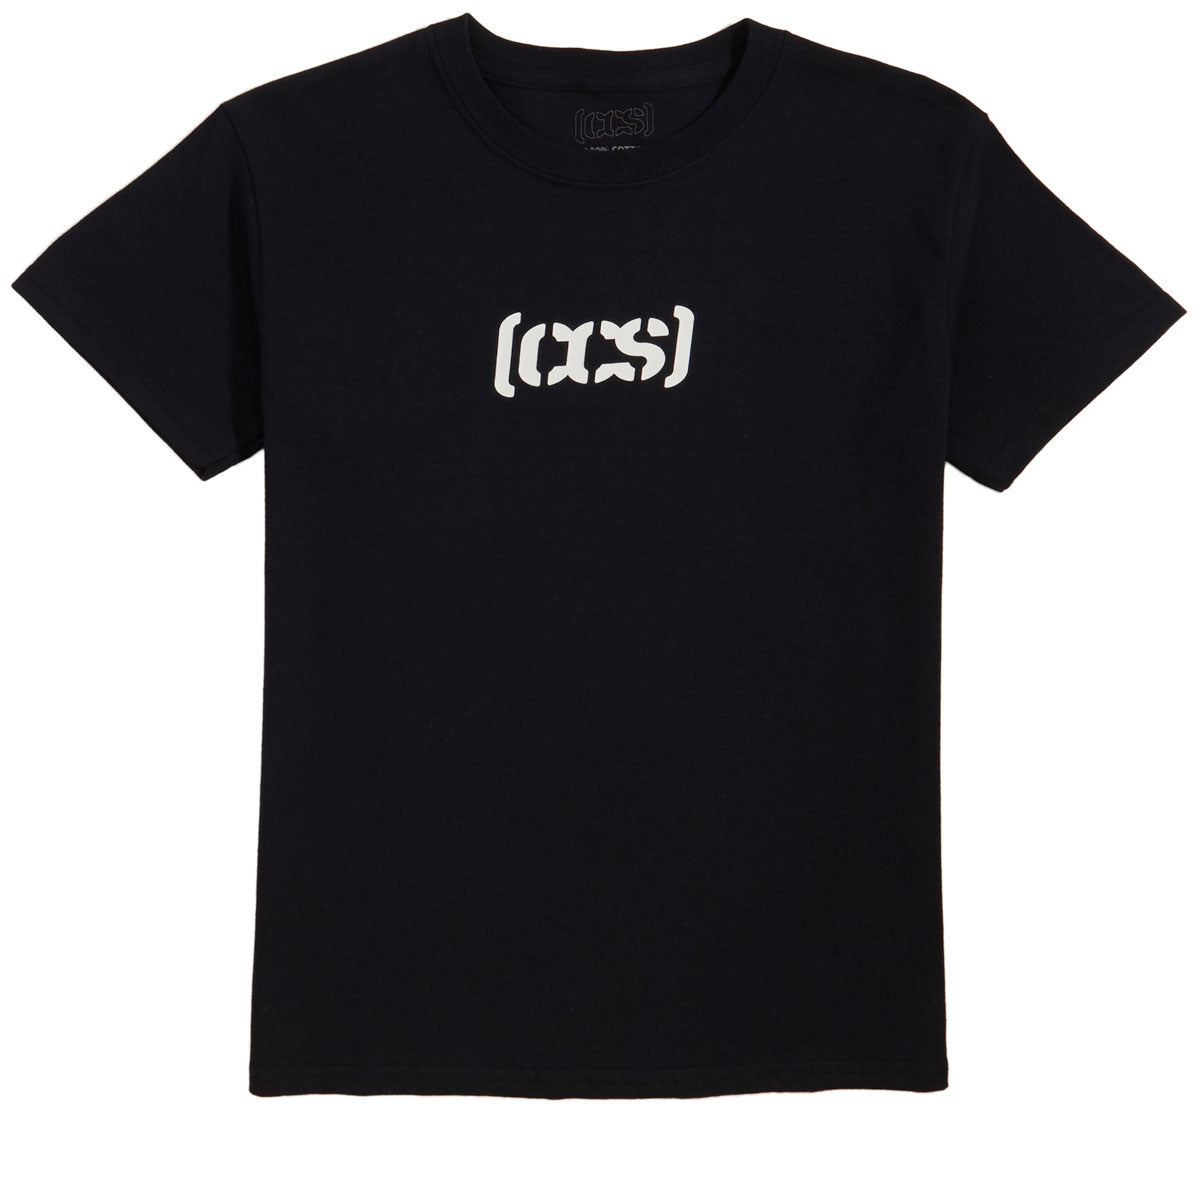 CCS Youth Logo T-Shirt - Black/White image 1